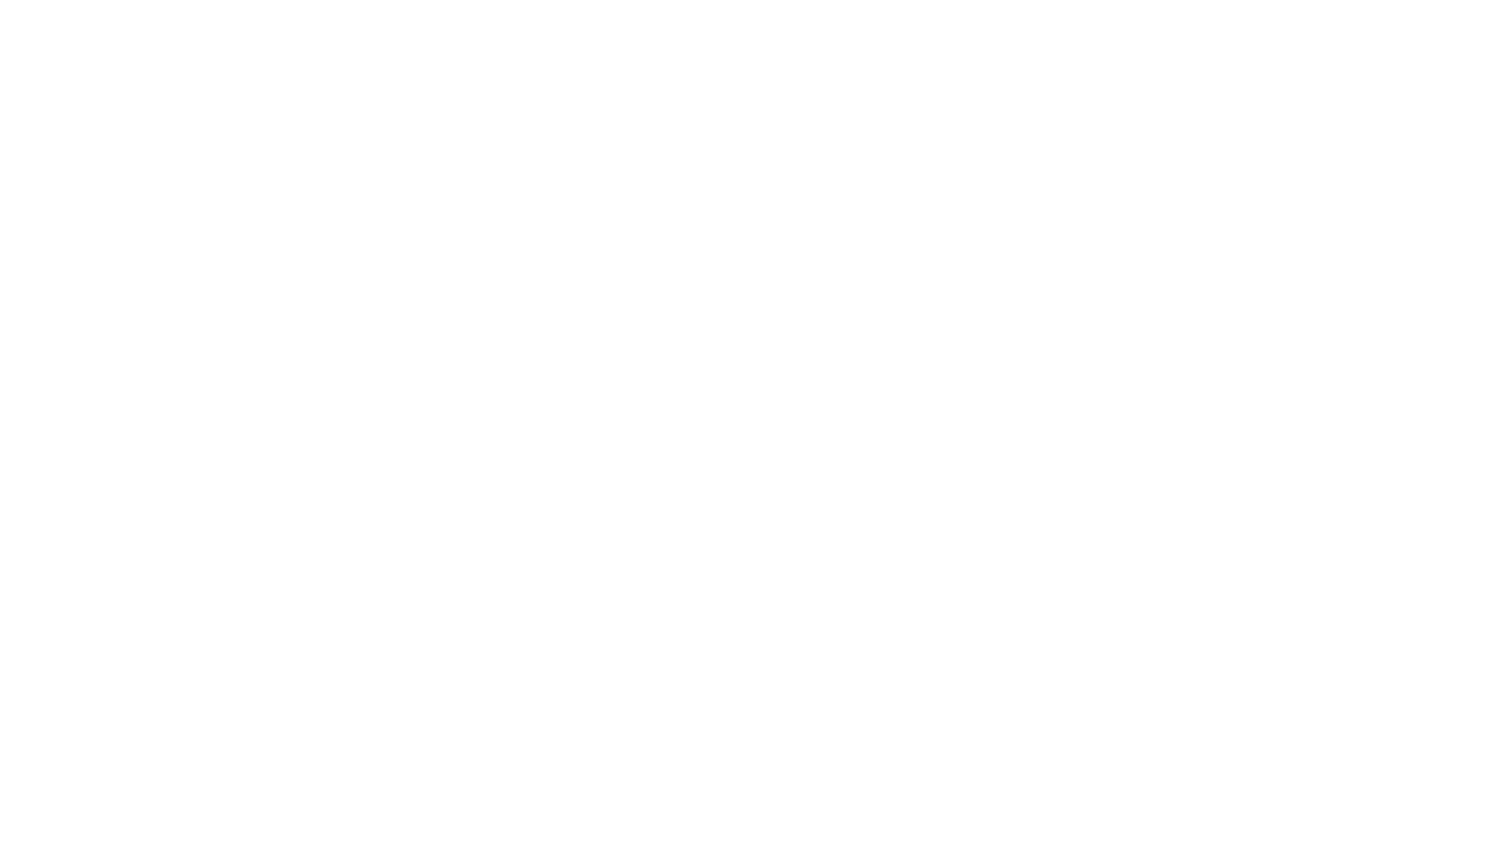 Speed Of Life Media